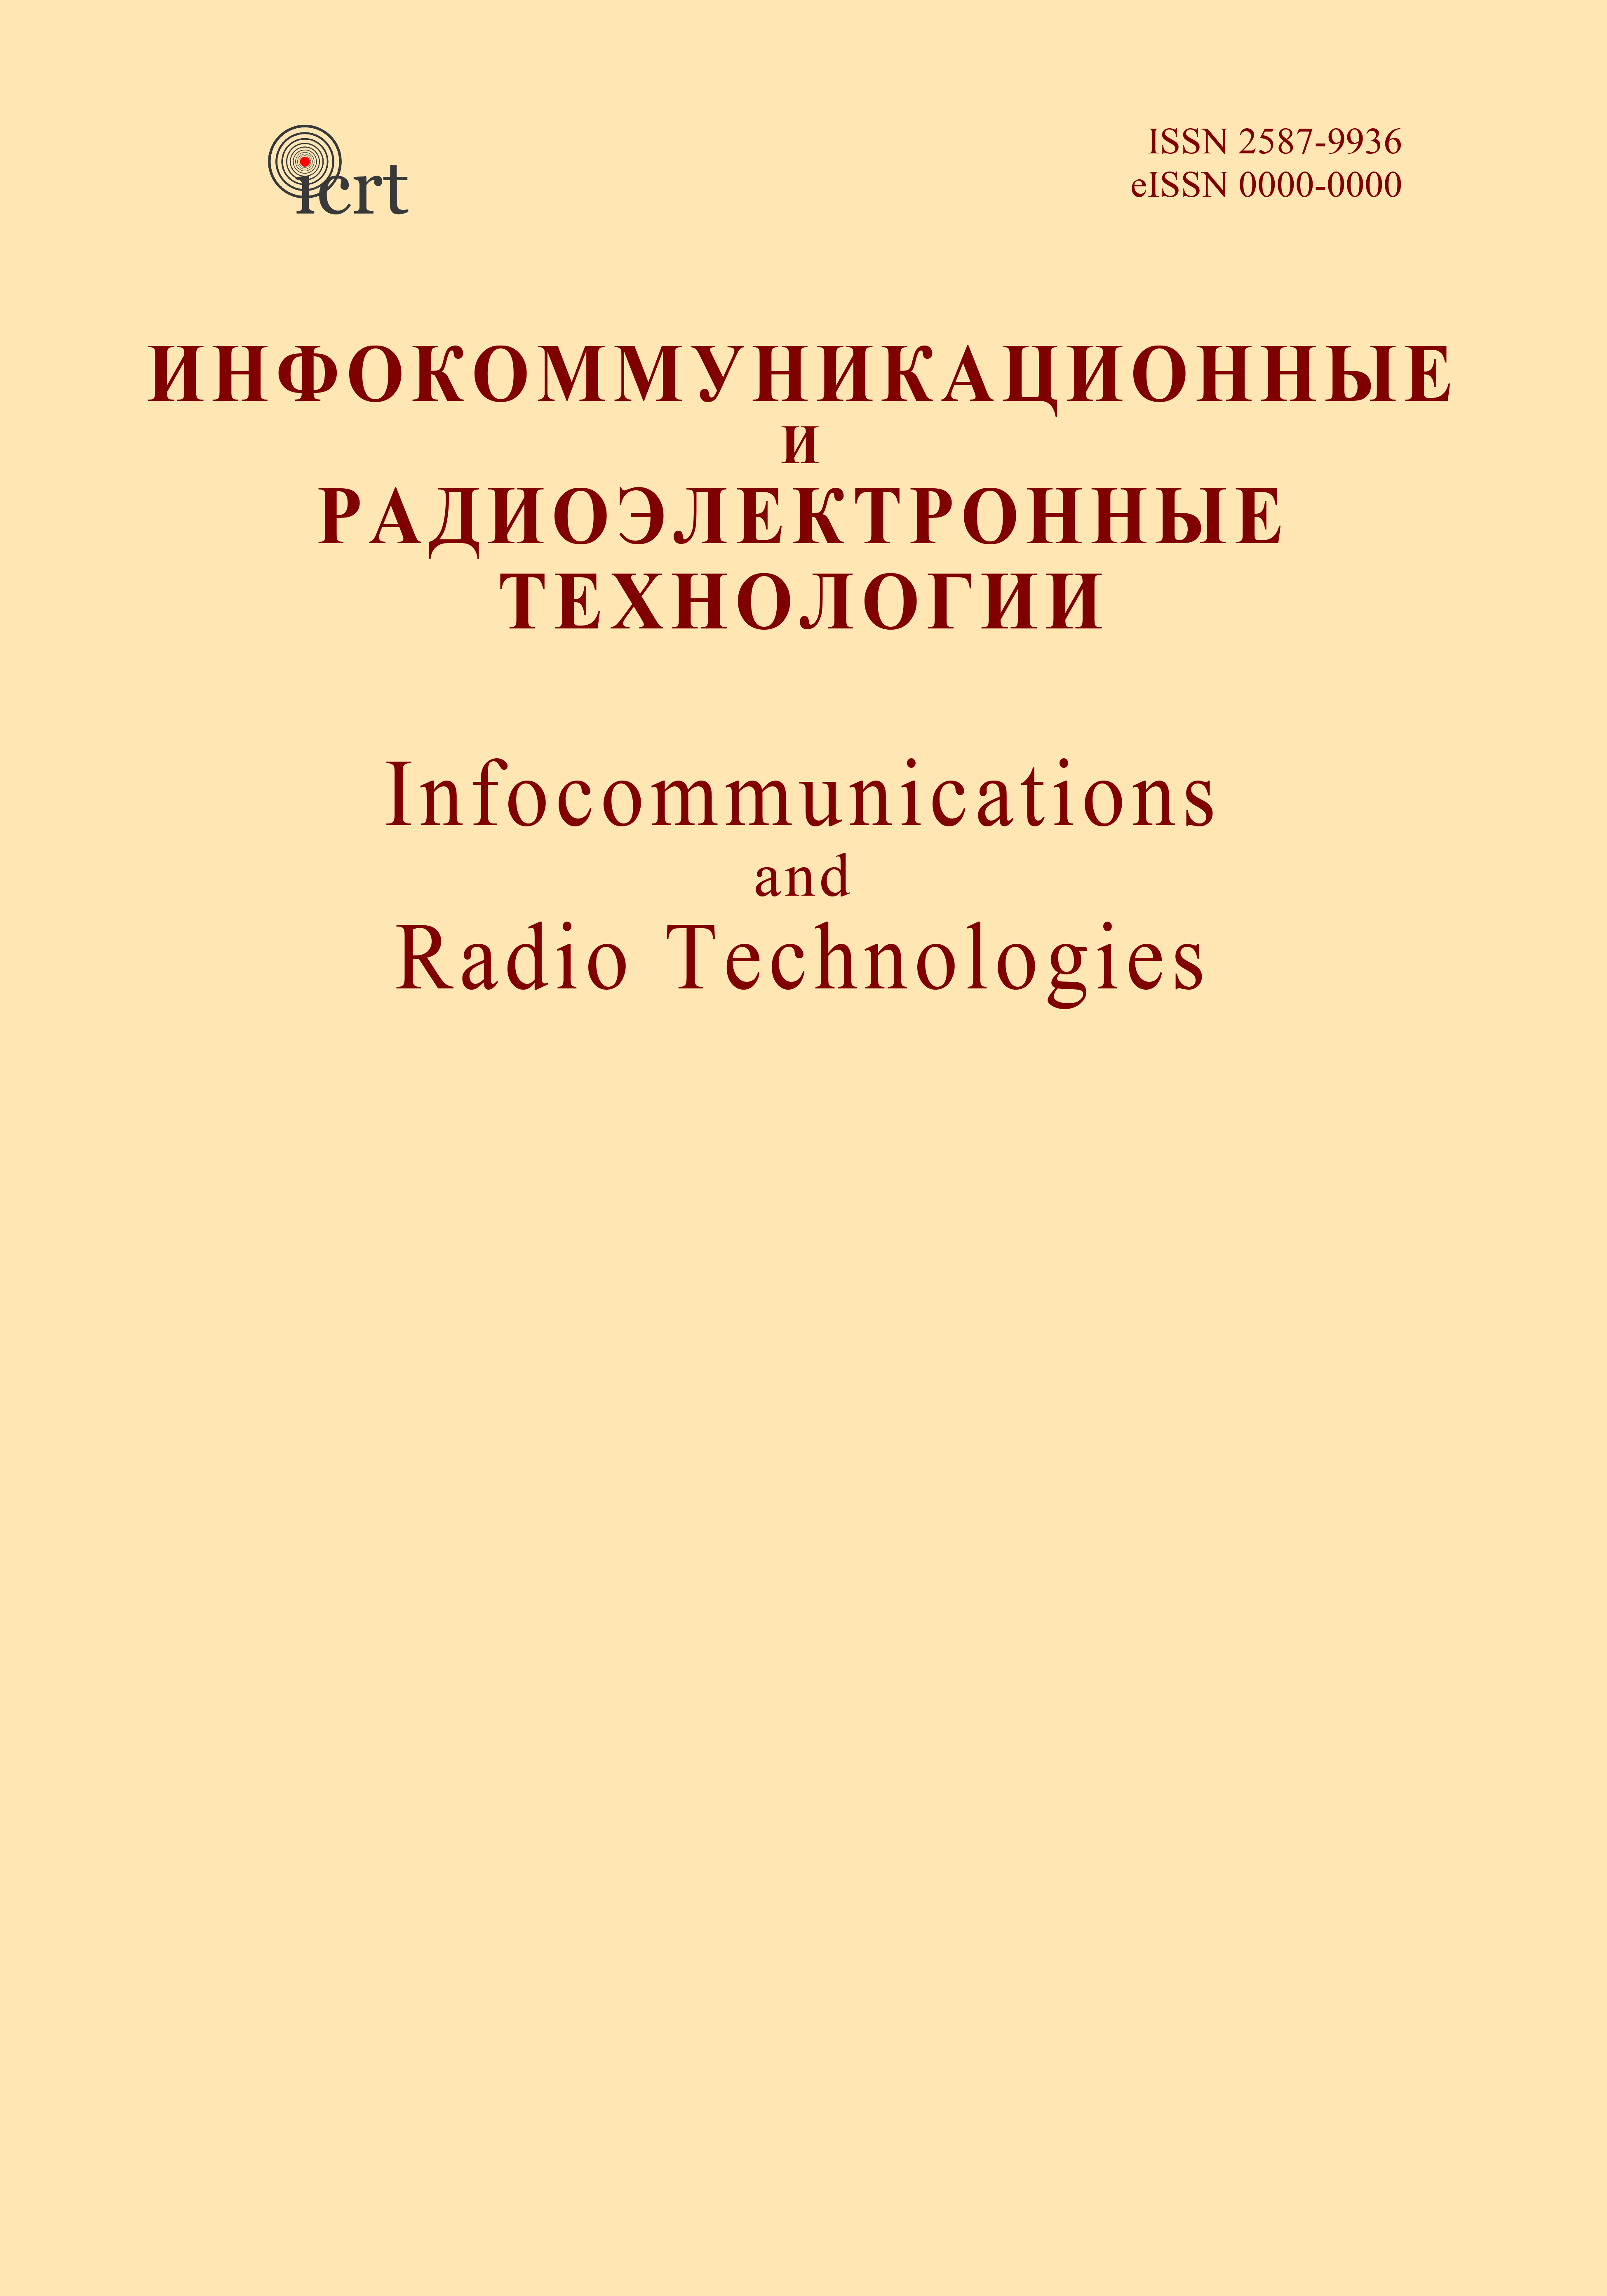                         Infocommunications and Radio Technologies
            